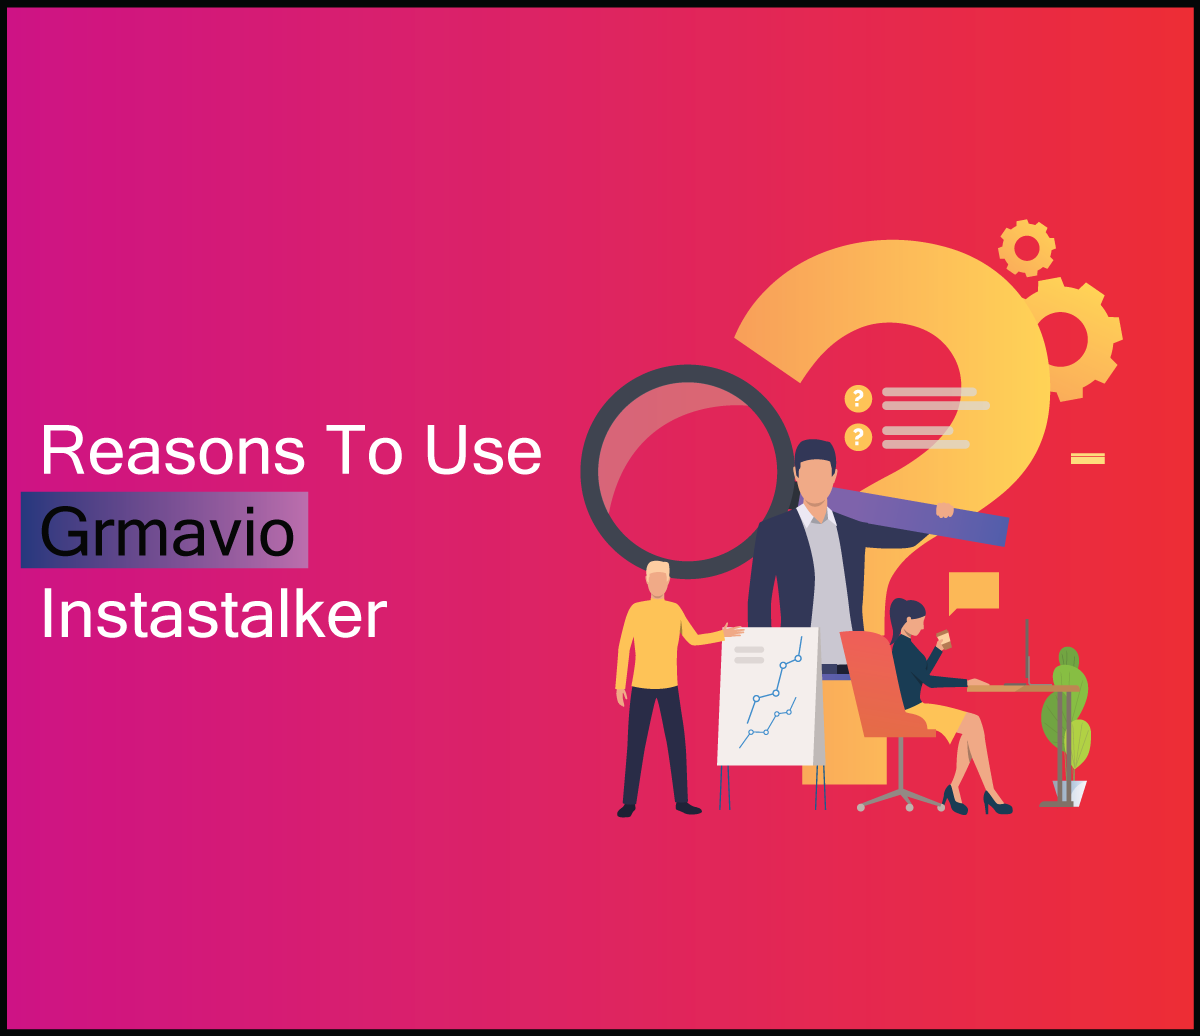 Reasons To Use Grmavio Instastalker